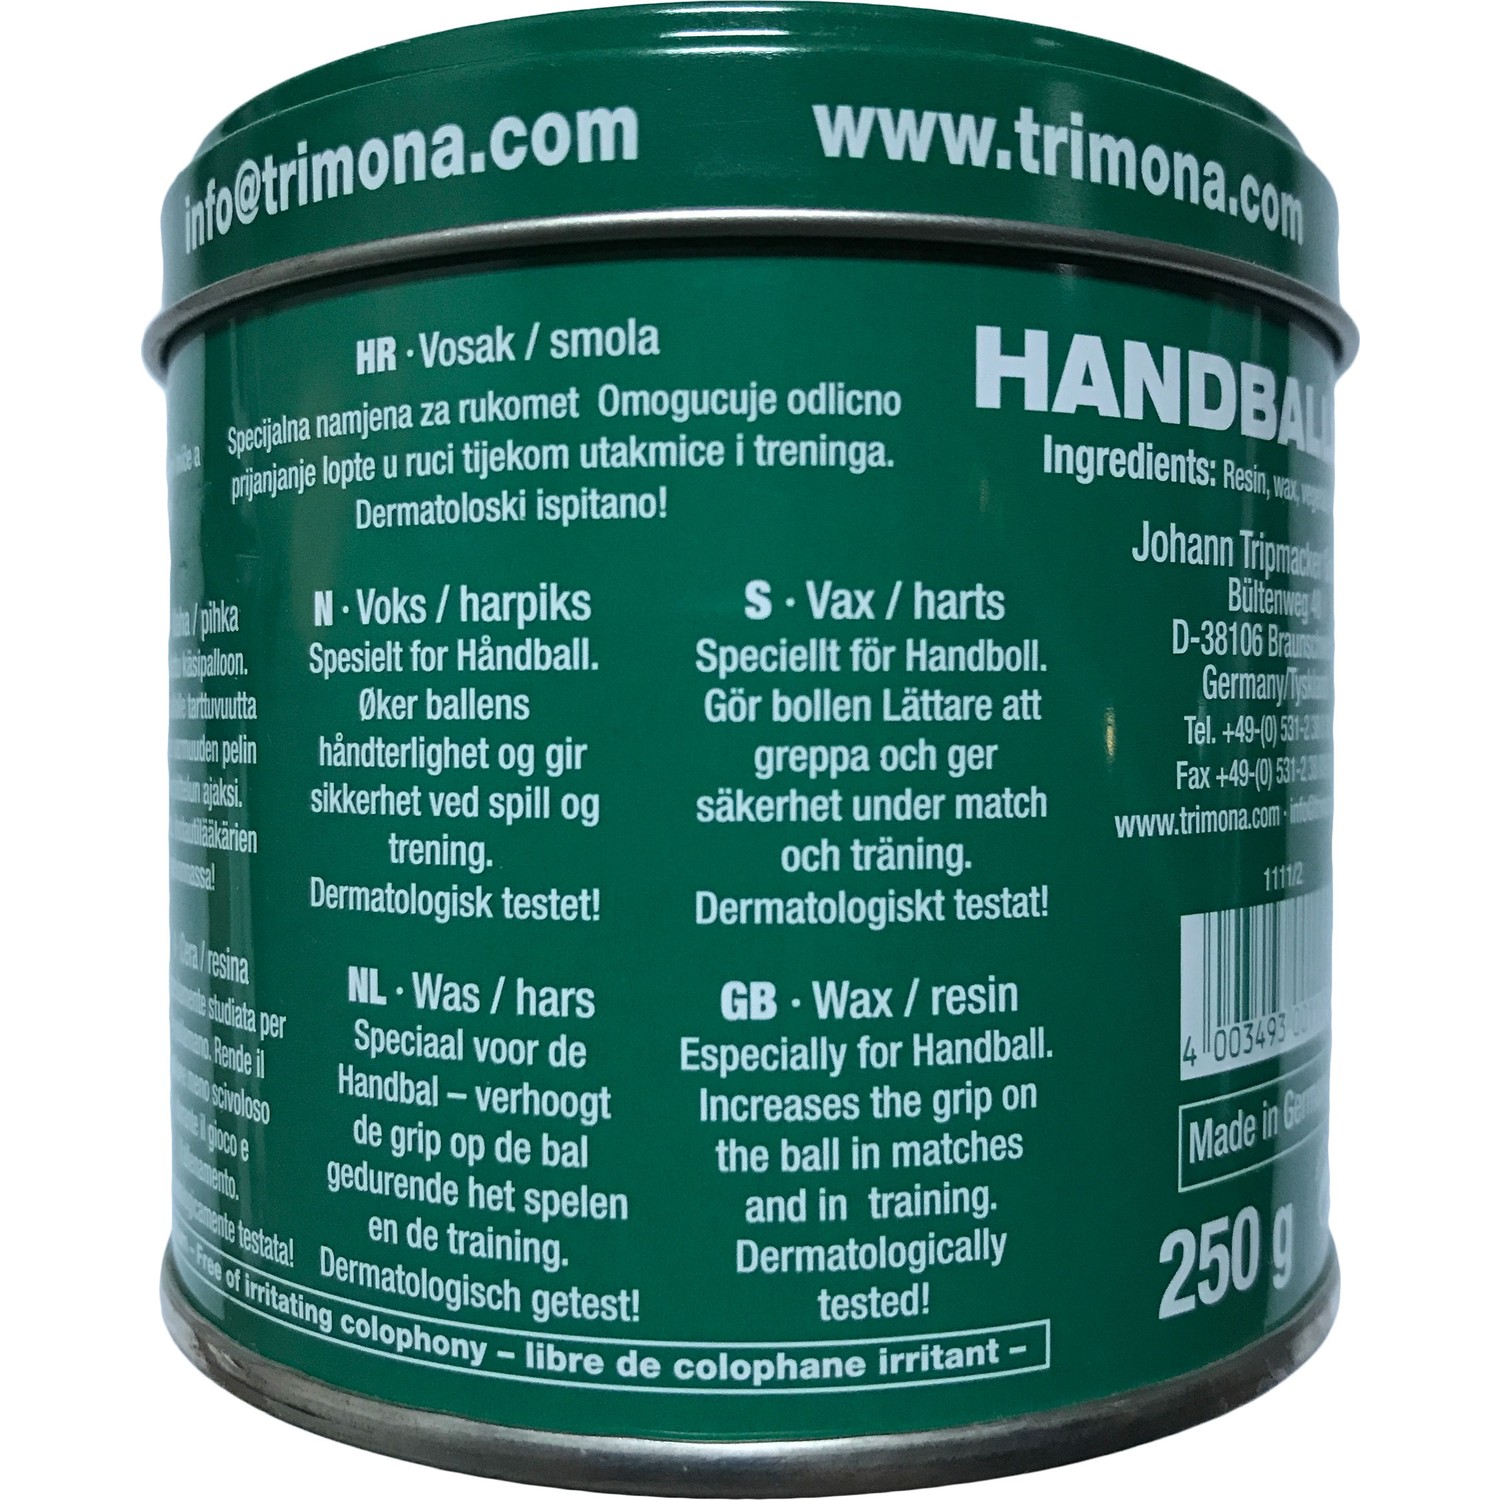 Trimona résine Handballwax - 250 g 